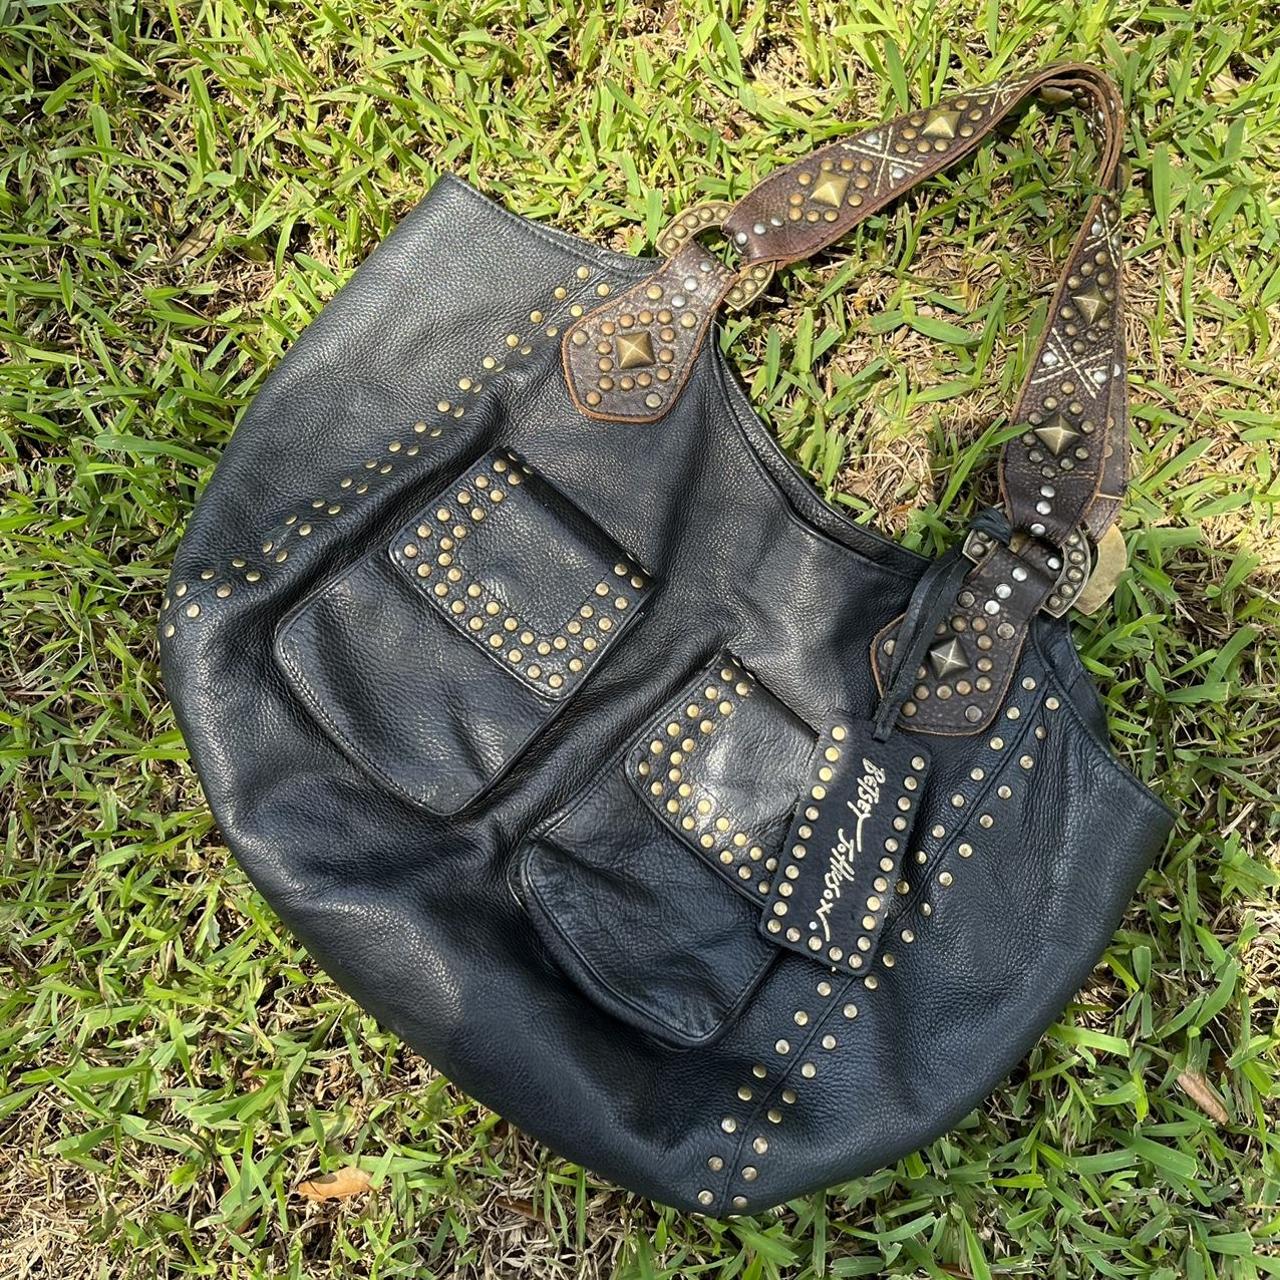 Vintage Womens Western Leather Crossbody Purse Shoulder Handbags